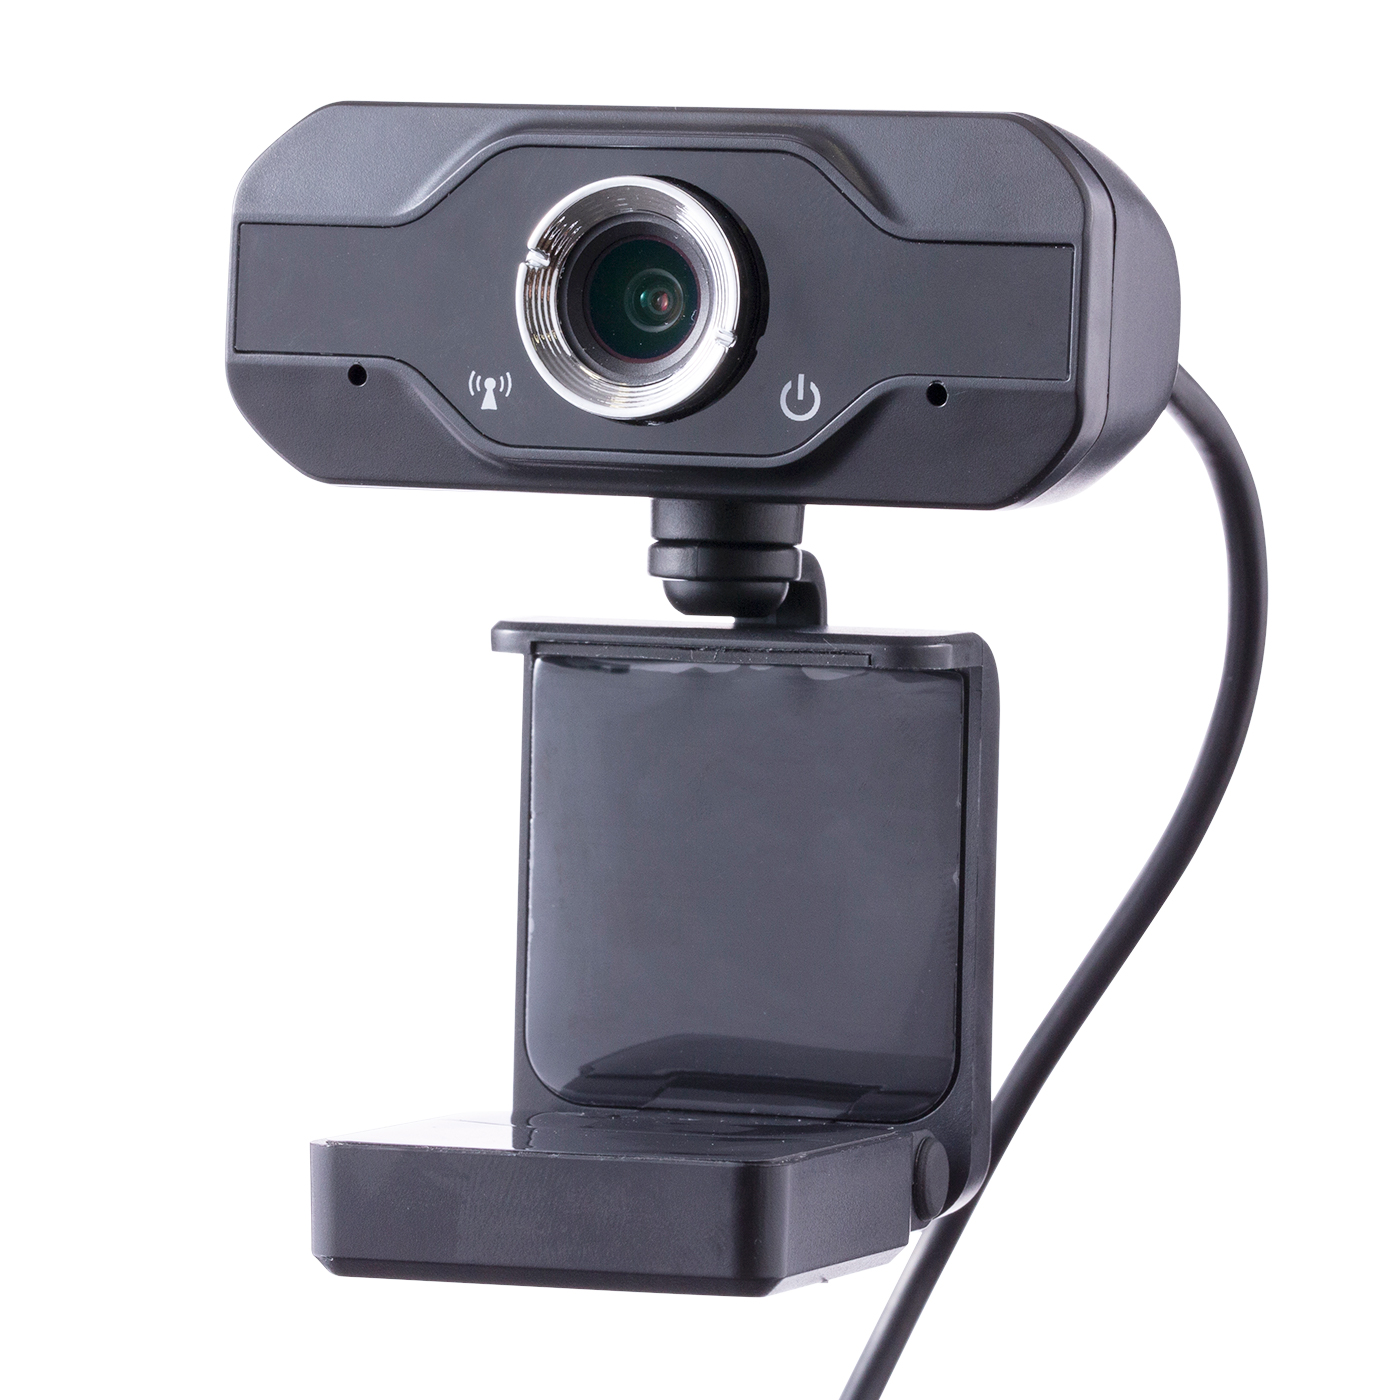 webカメラ 150°広角 視野角が広く、広角レンズ仕様なので部屋全体が広く映るWEBカメラ USB接続 広角150度レンズ 防犯 監視カメラ モニタリング 盗難防止